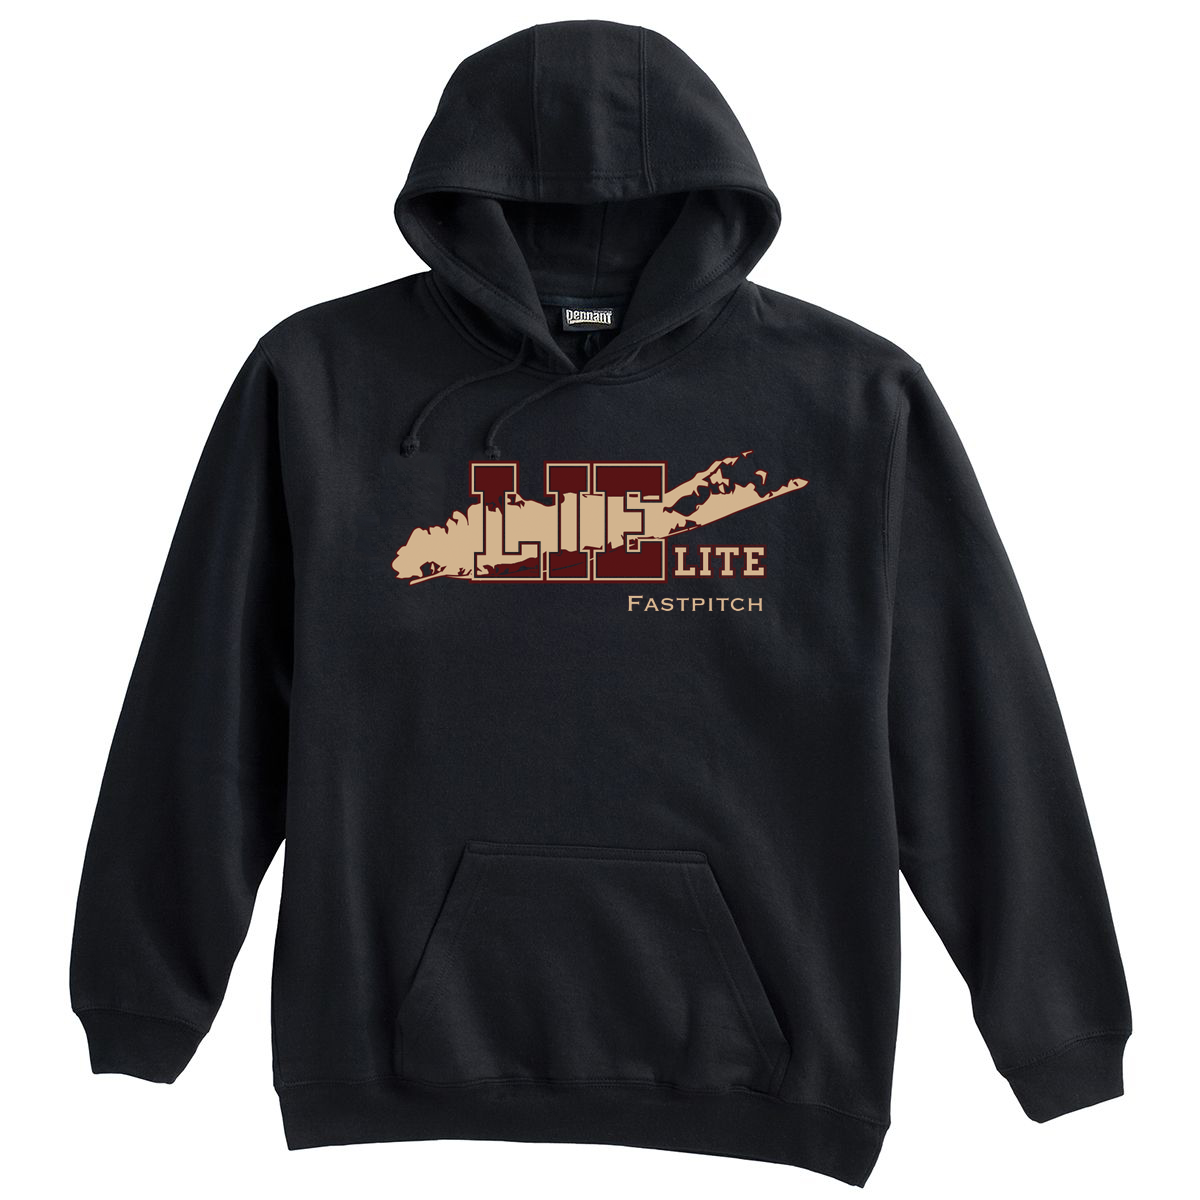 LI Elite Fastpitch Sweatshirt